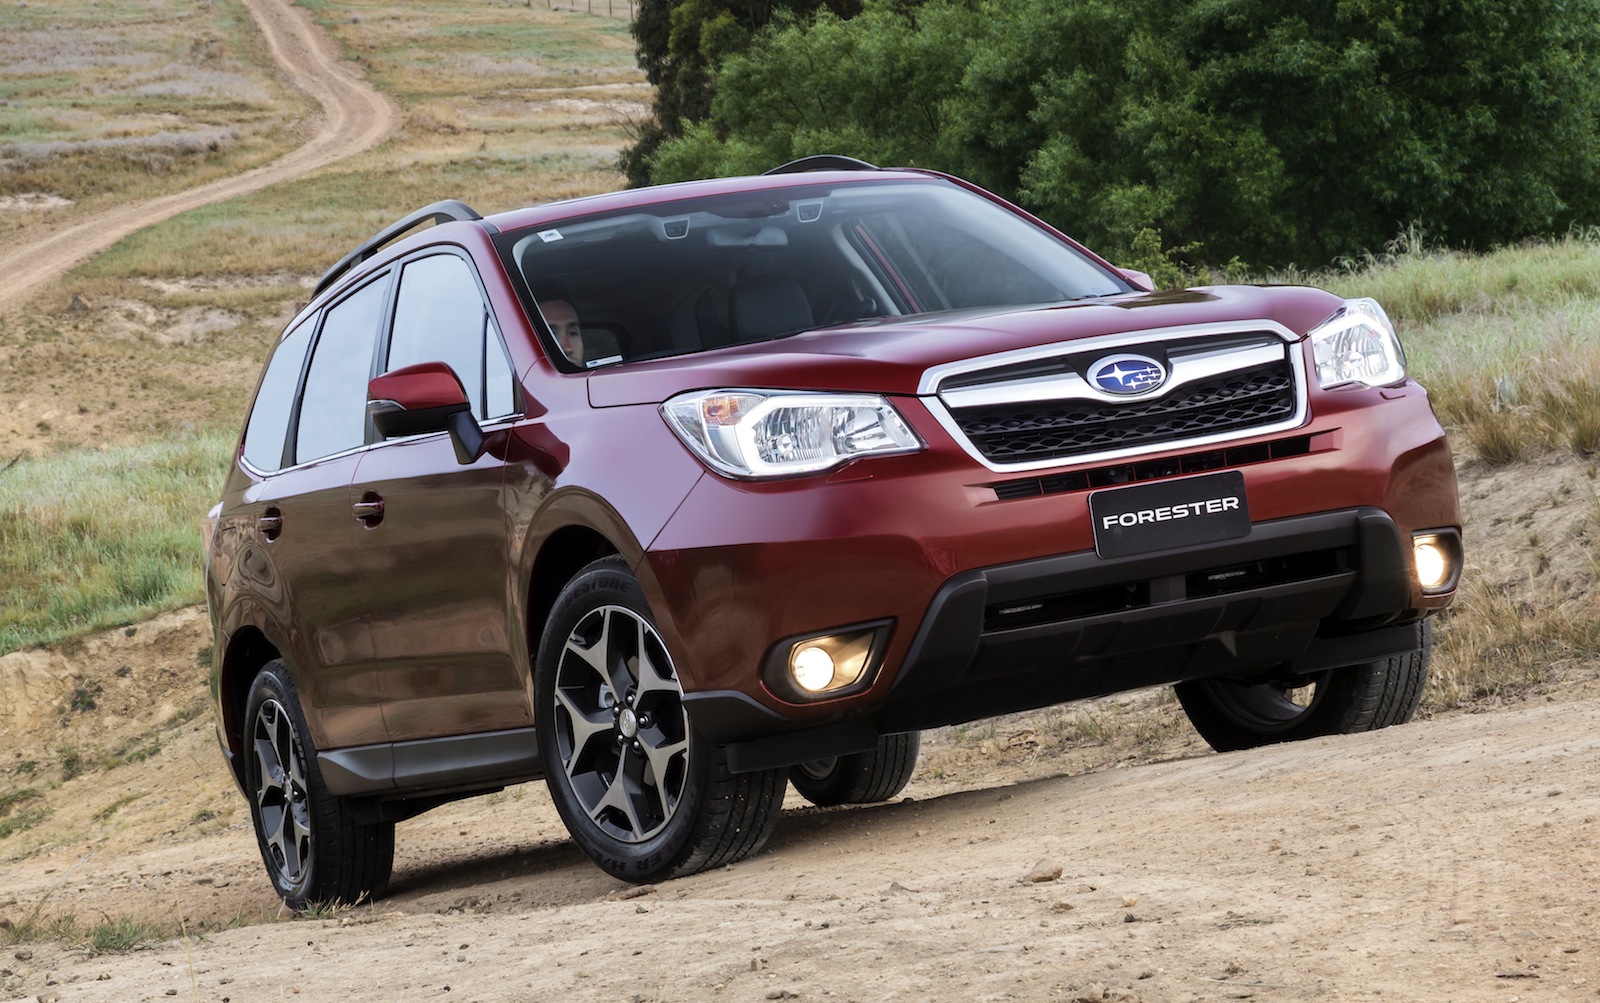 2013 Subaru Forester Review photos CarAdvice